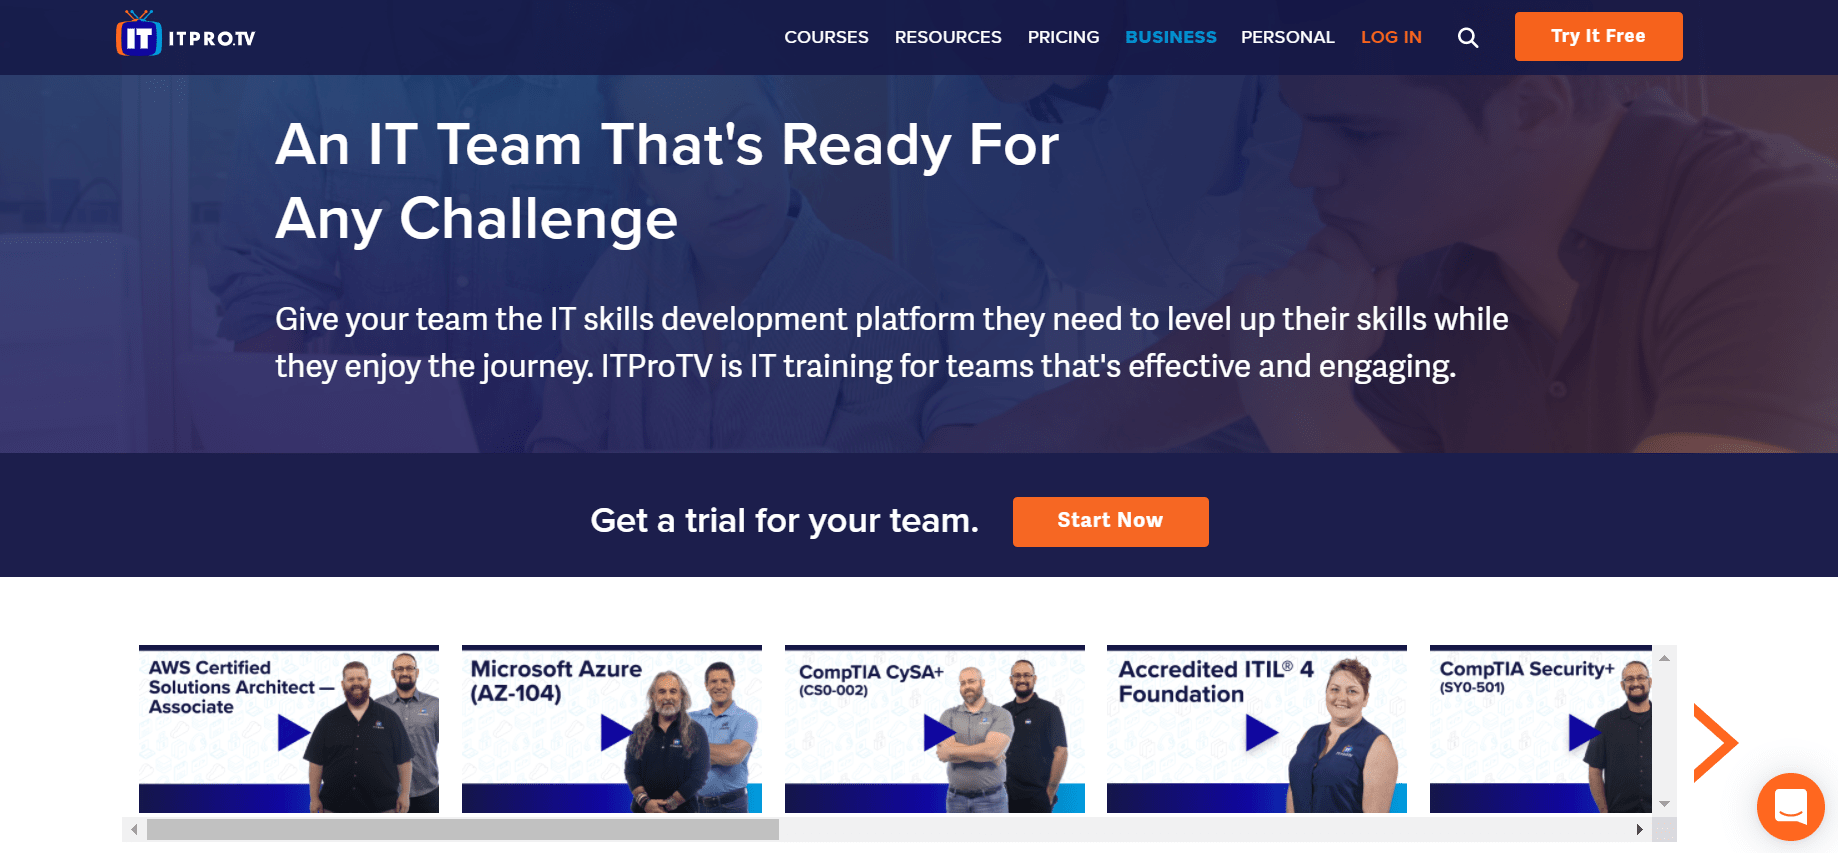 ITProTv- get a trial for your team